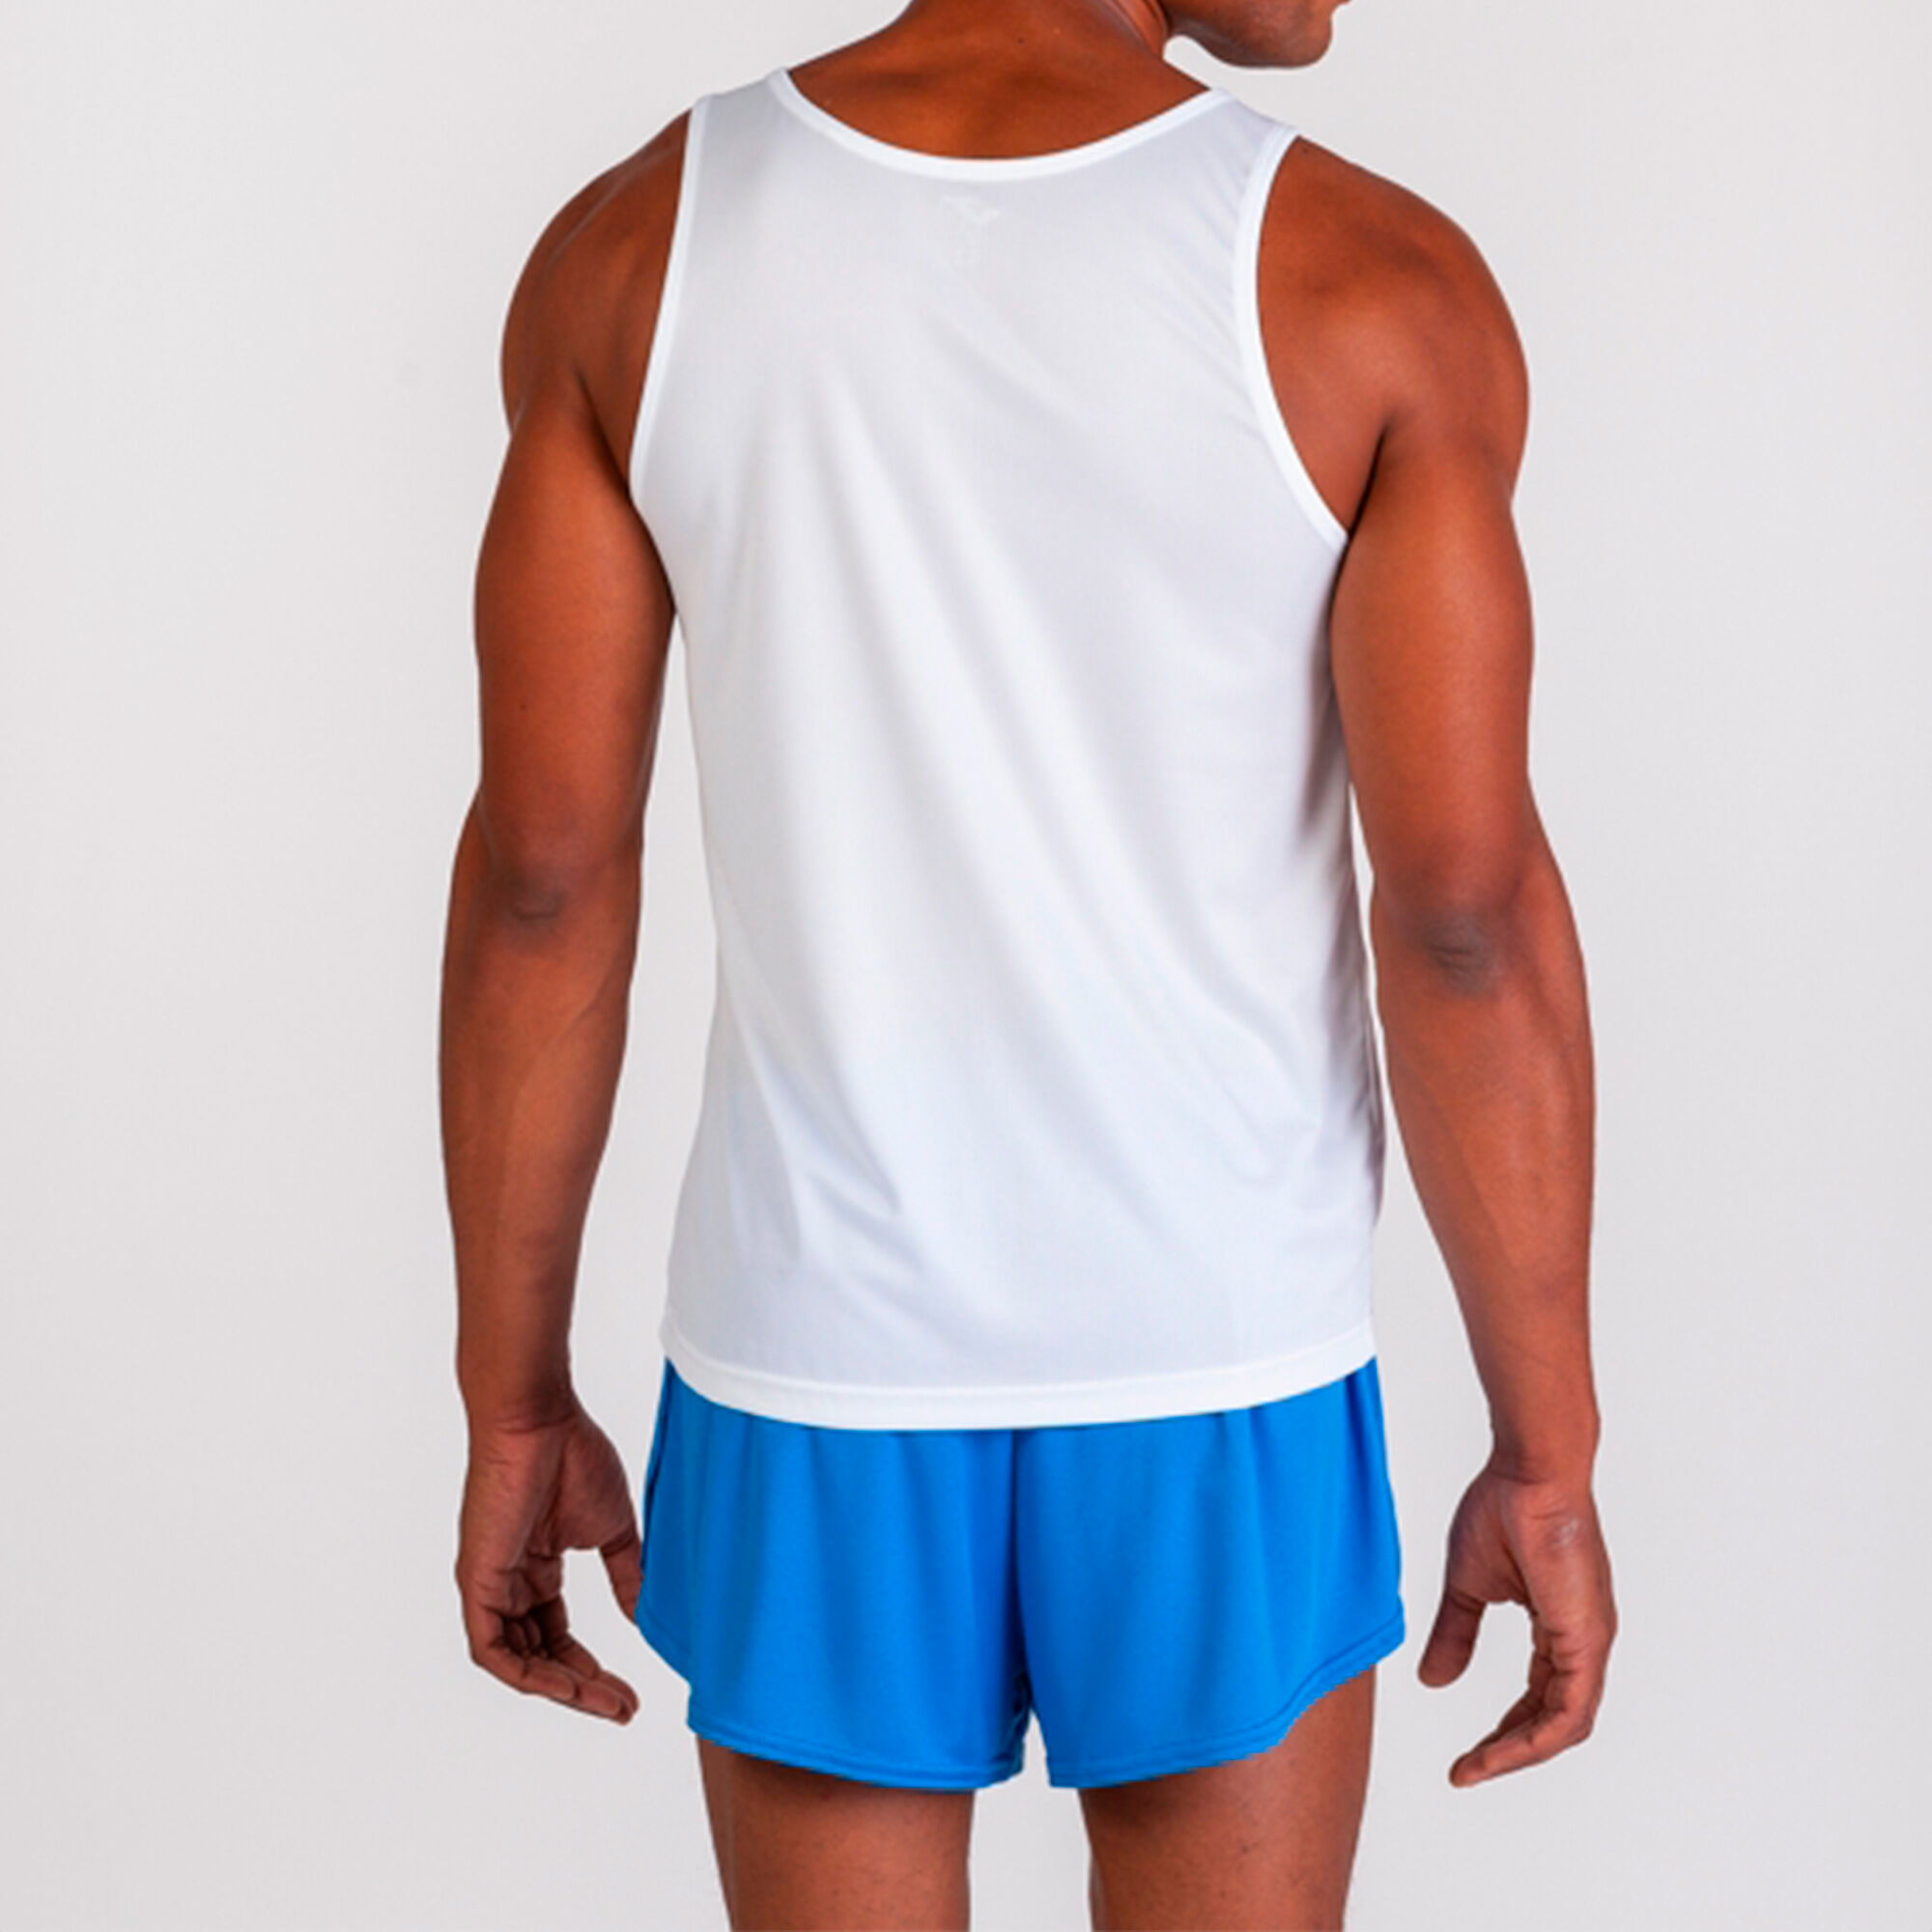 Sleeveless t-shirt man Race white royal blue